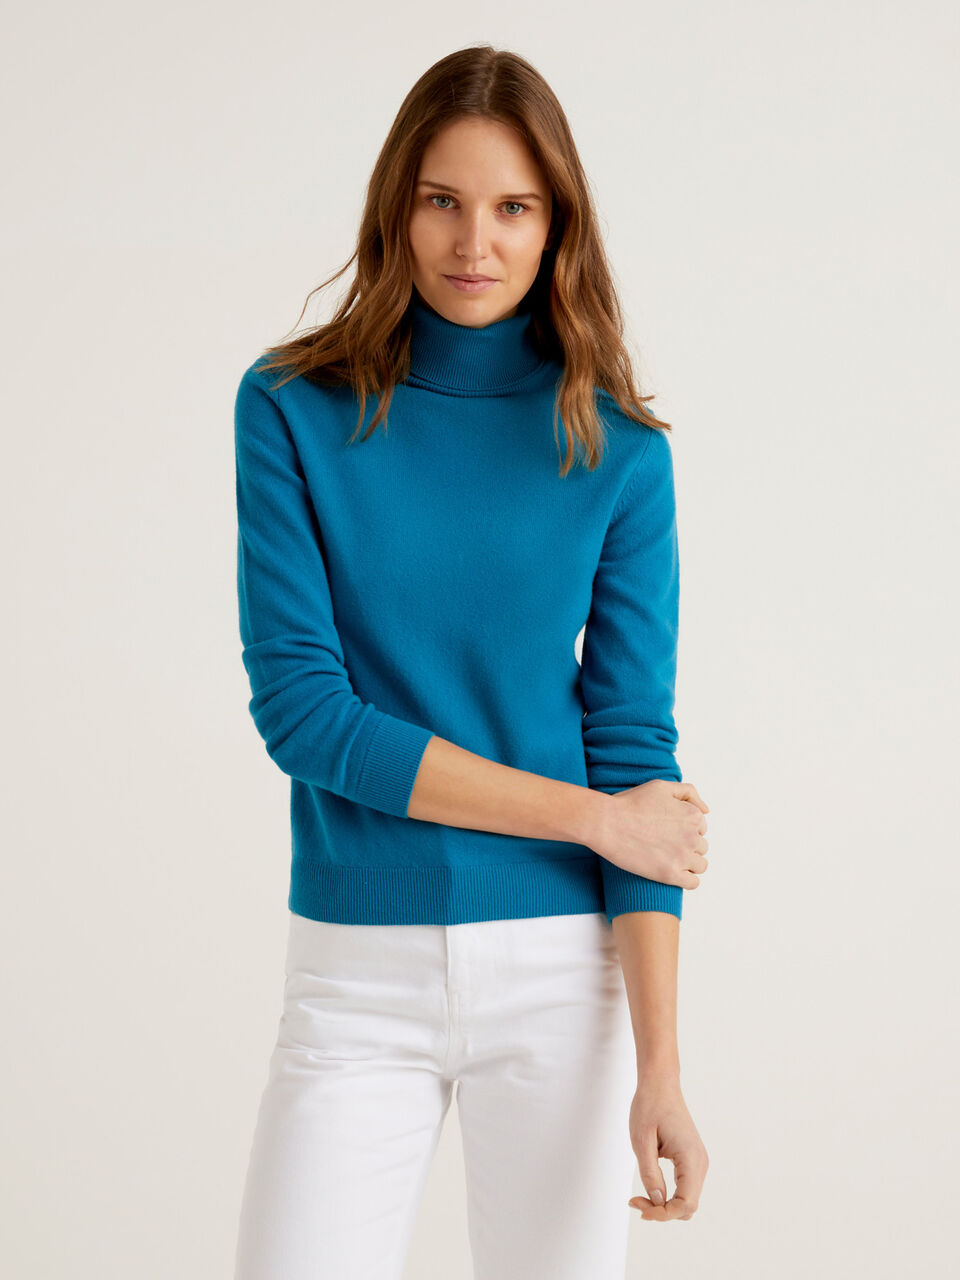 Teal turtleneck sweater in pure Merino wool - Teal